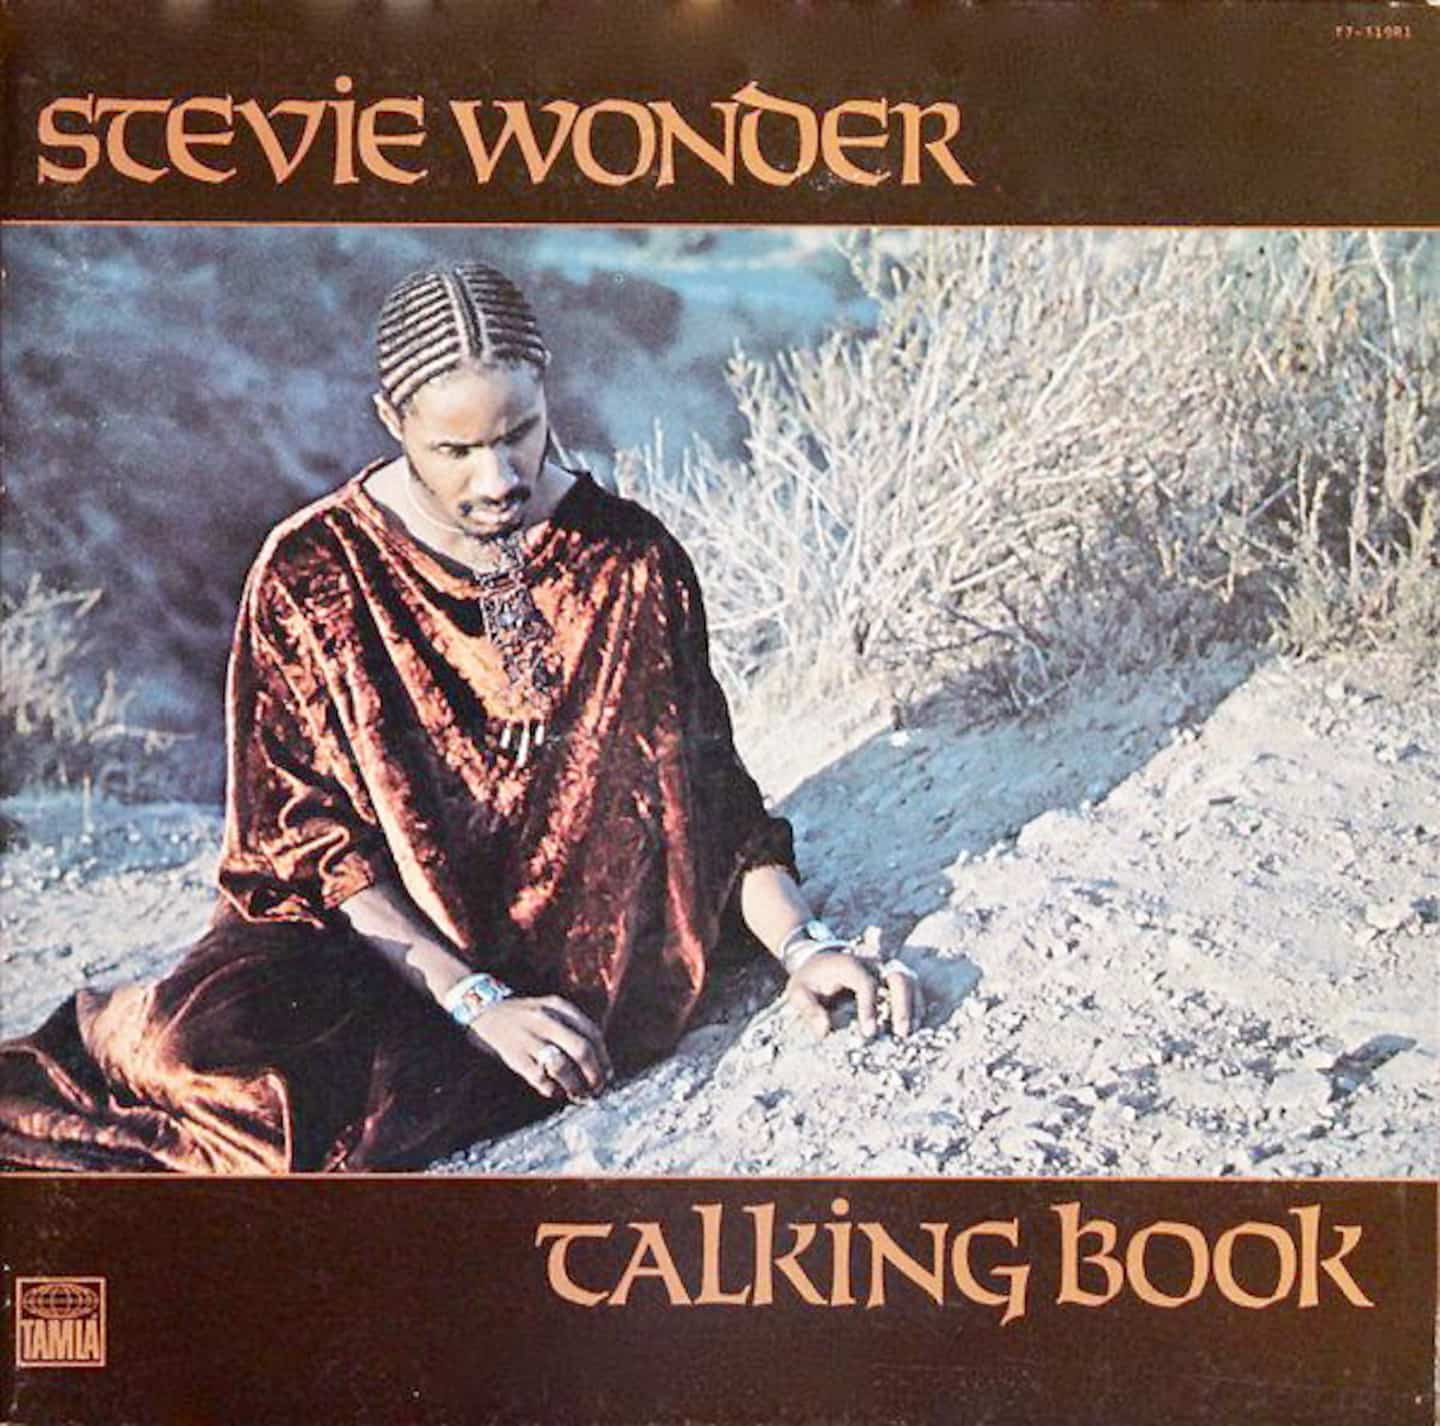 'Talking Book' turns 50: Stevie Wonder took over